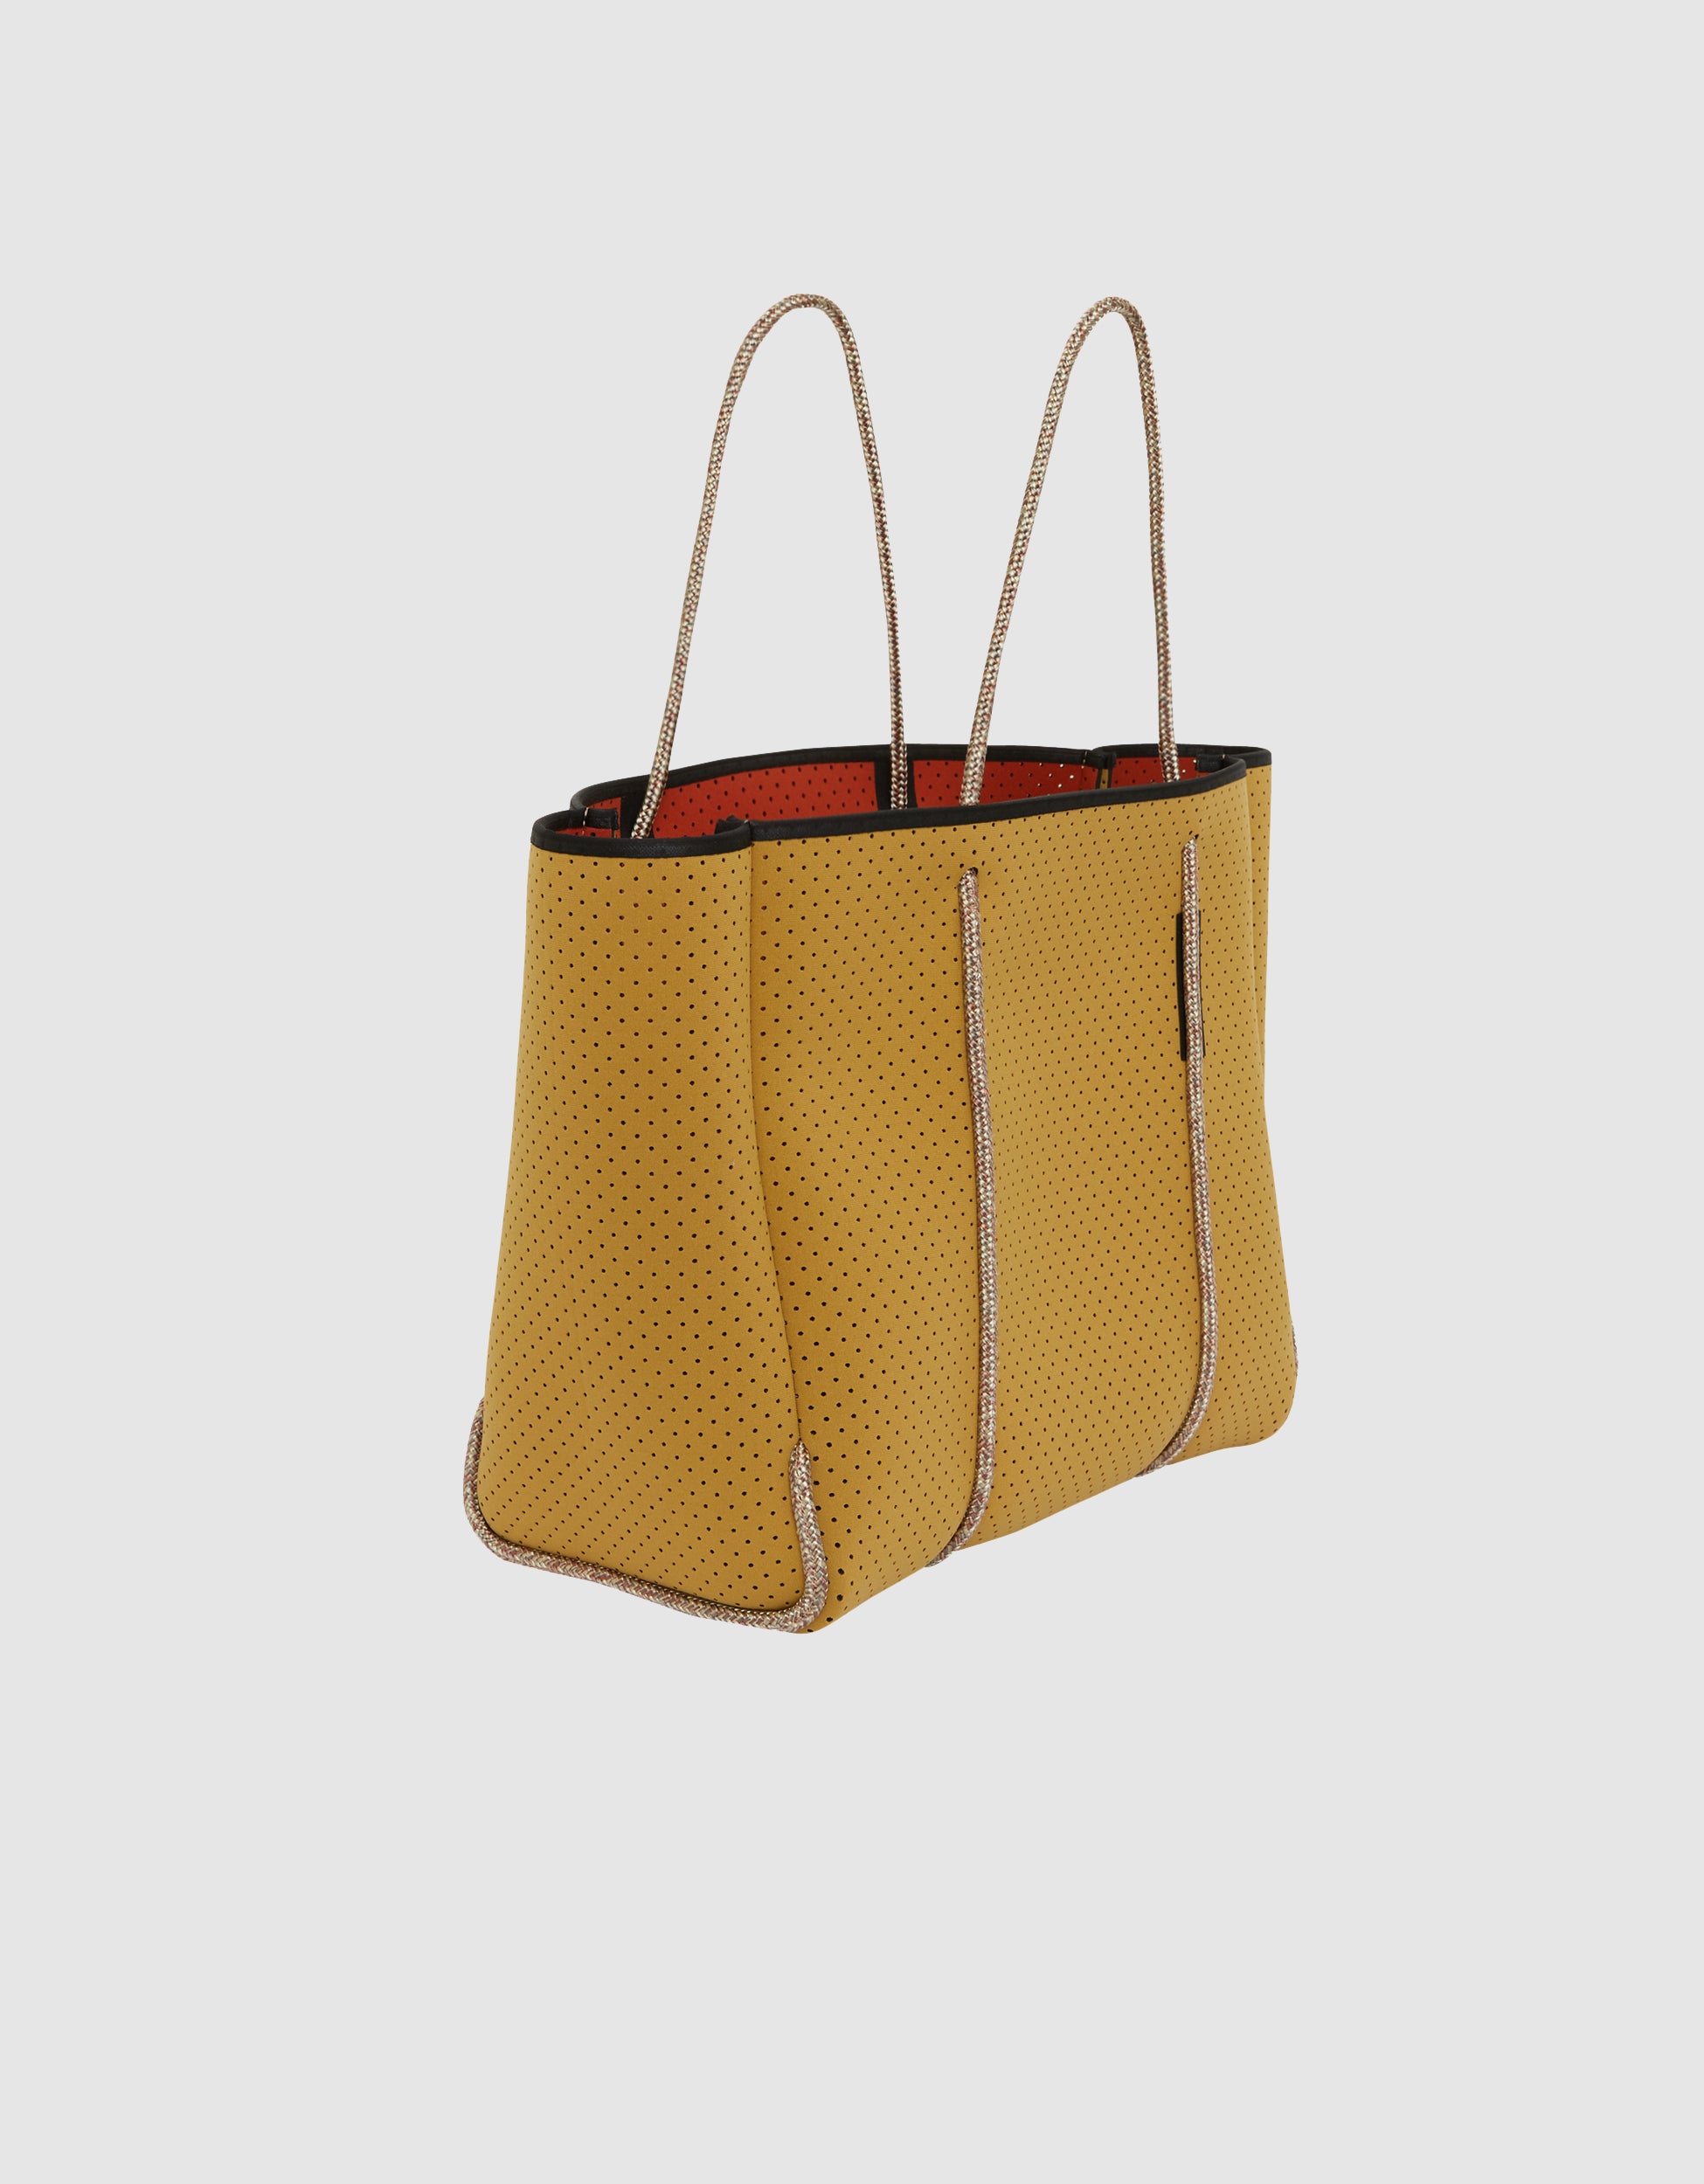 State of Escape® | Australian Contemporary Totes & Handbags